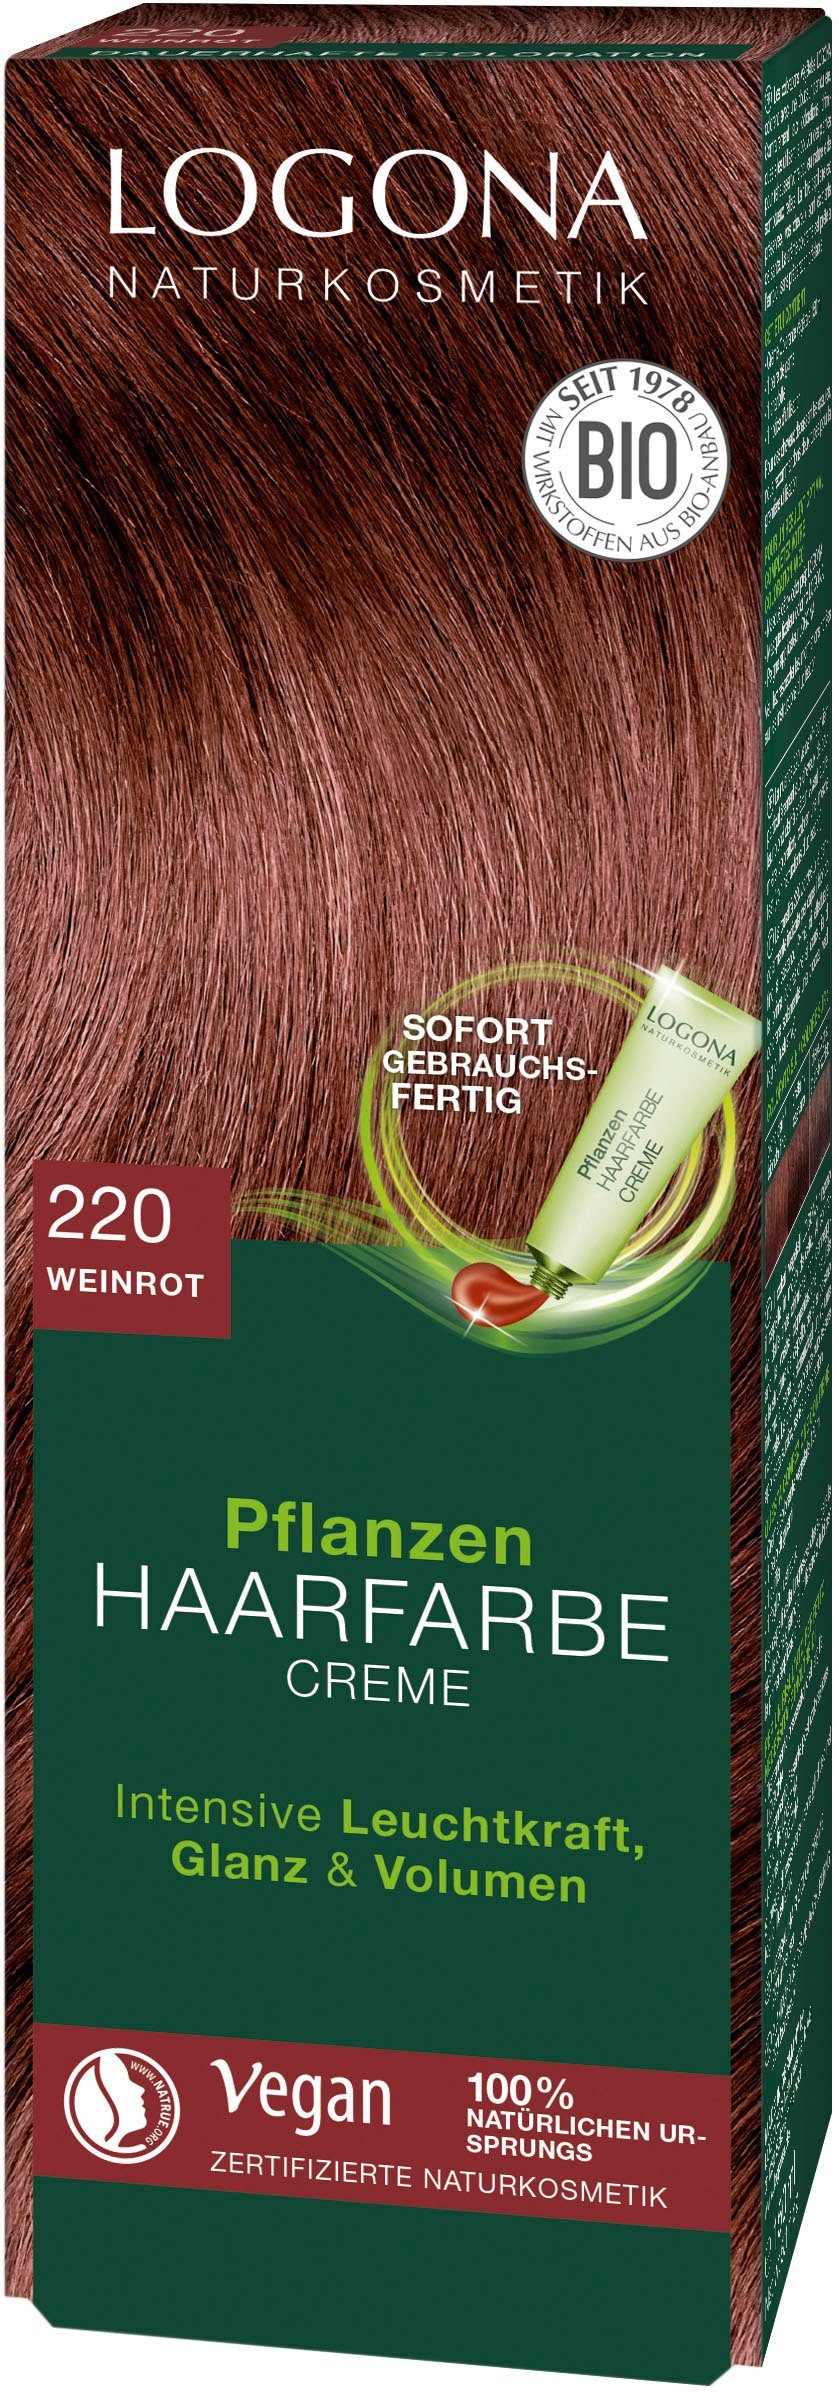 Logona Creme Haarfarbe 220 weinrot LOGONA Pflanzen-Haarfarbe